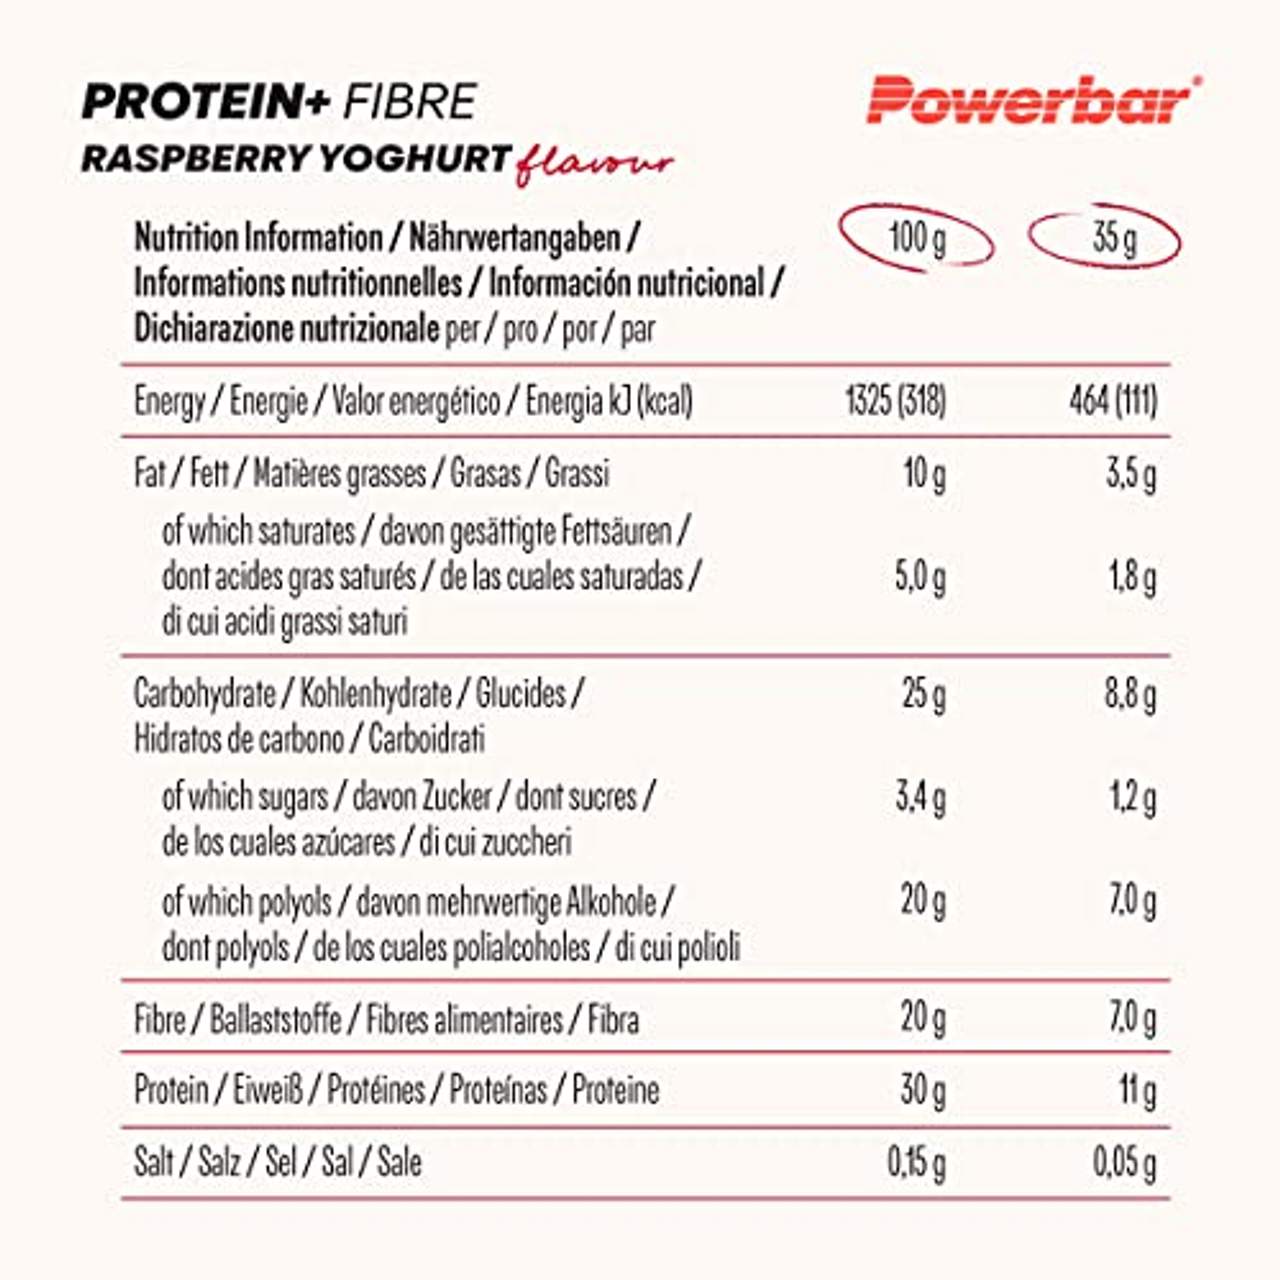 PowerBar Protein Plus Fibre Raspberry Yoghurt 24x35g